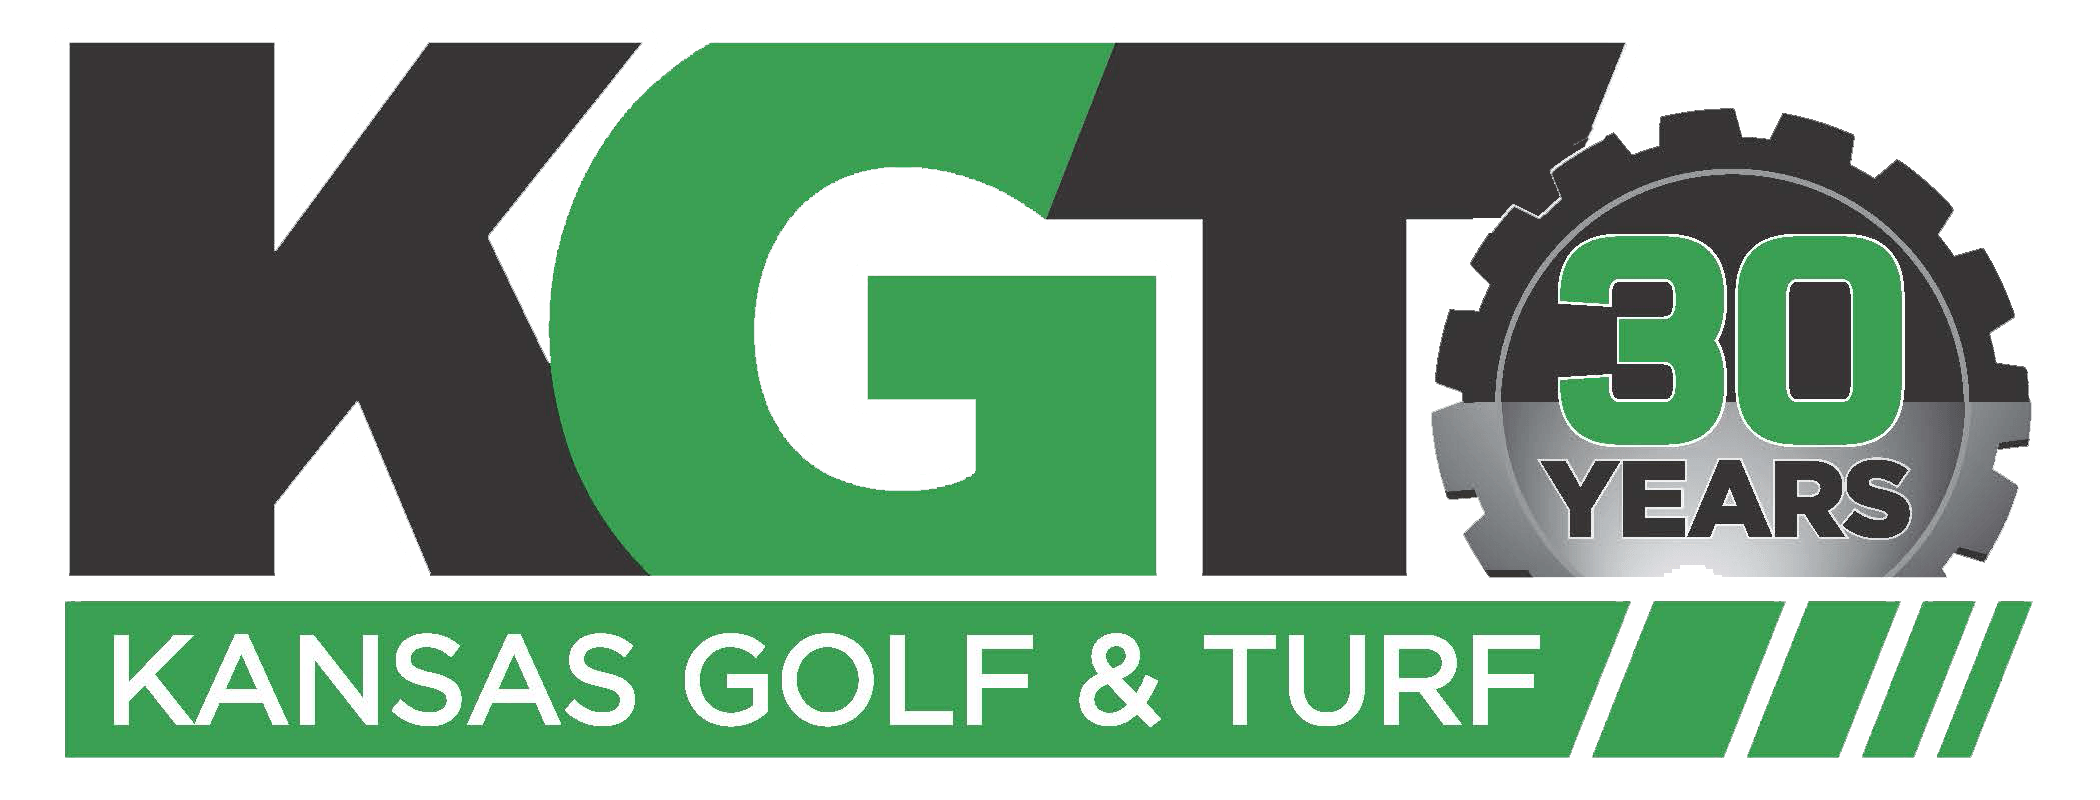 Kansas Golf and Turf